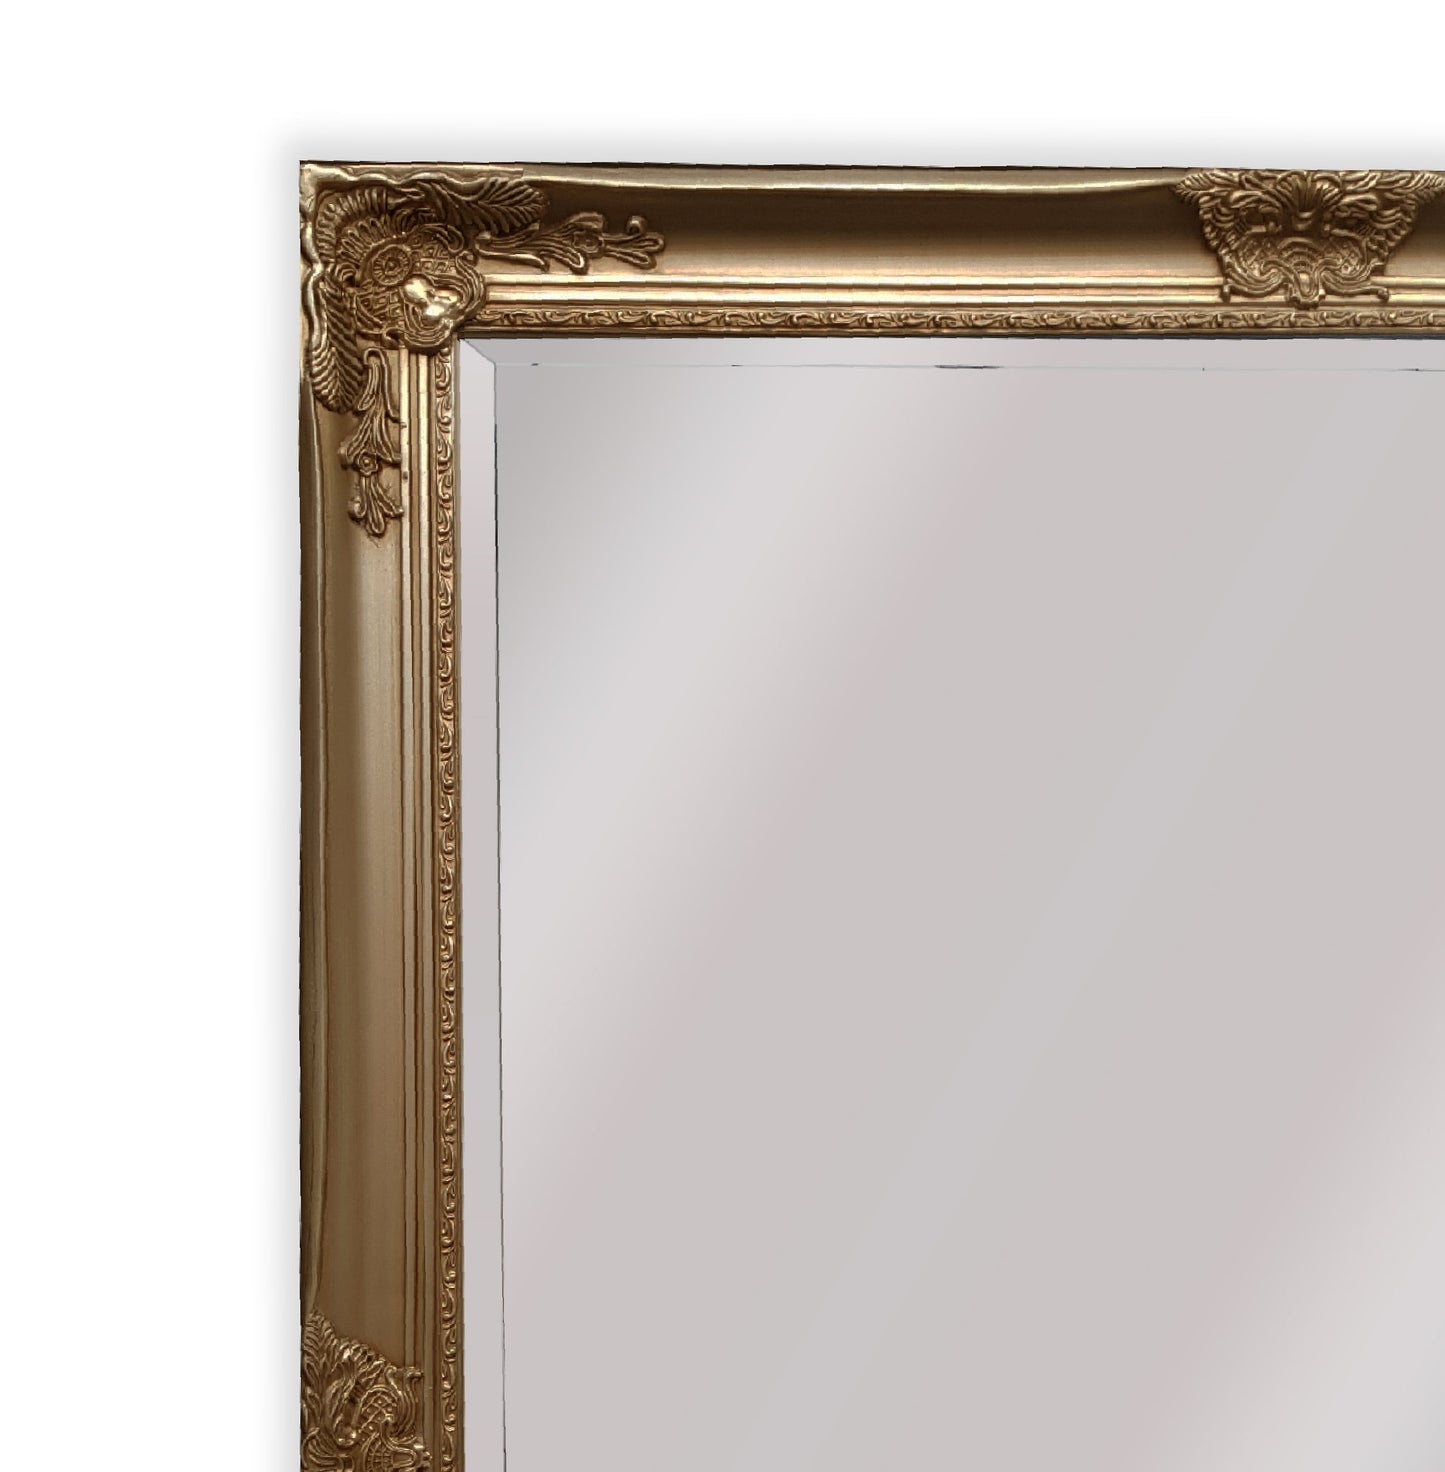 French Provincial Ornate Mirror - Champagne - Medium 70cm x 170cm - image2